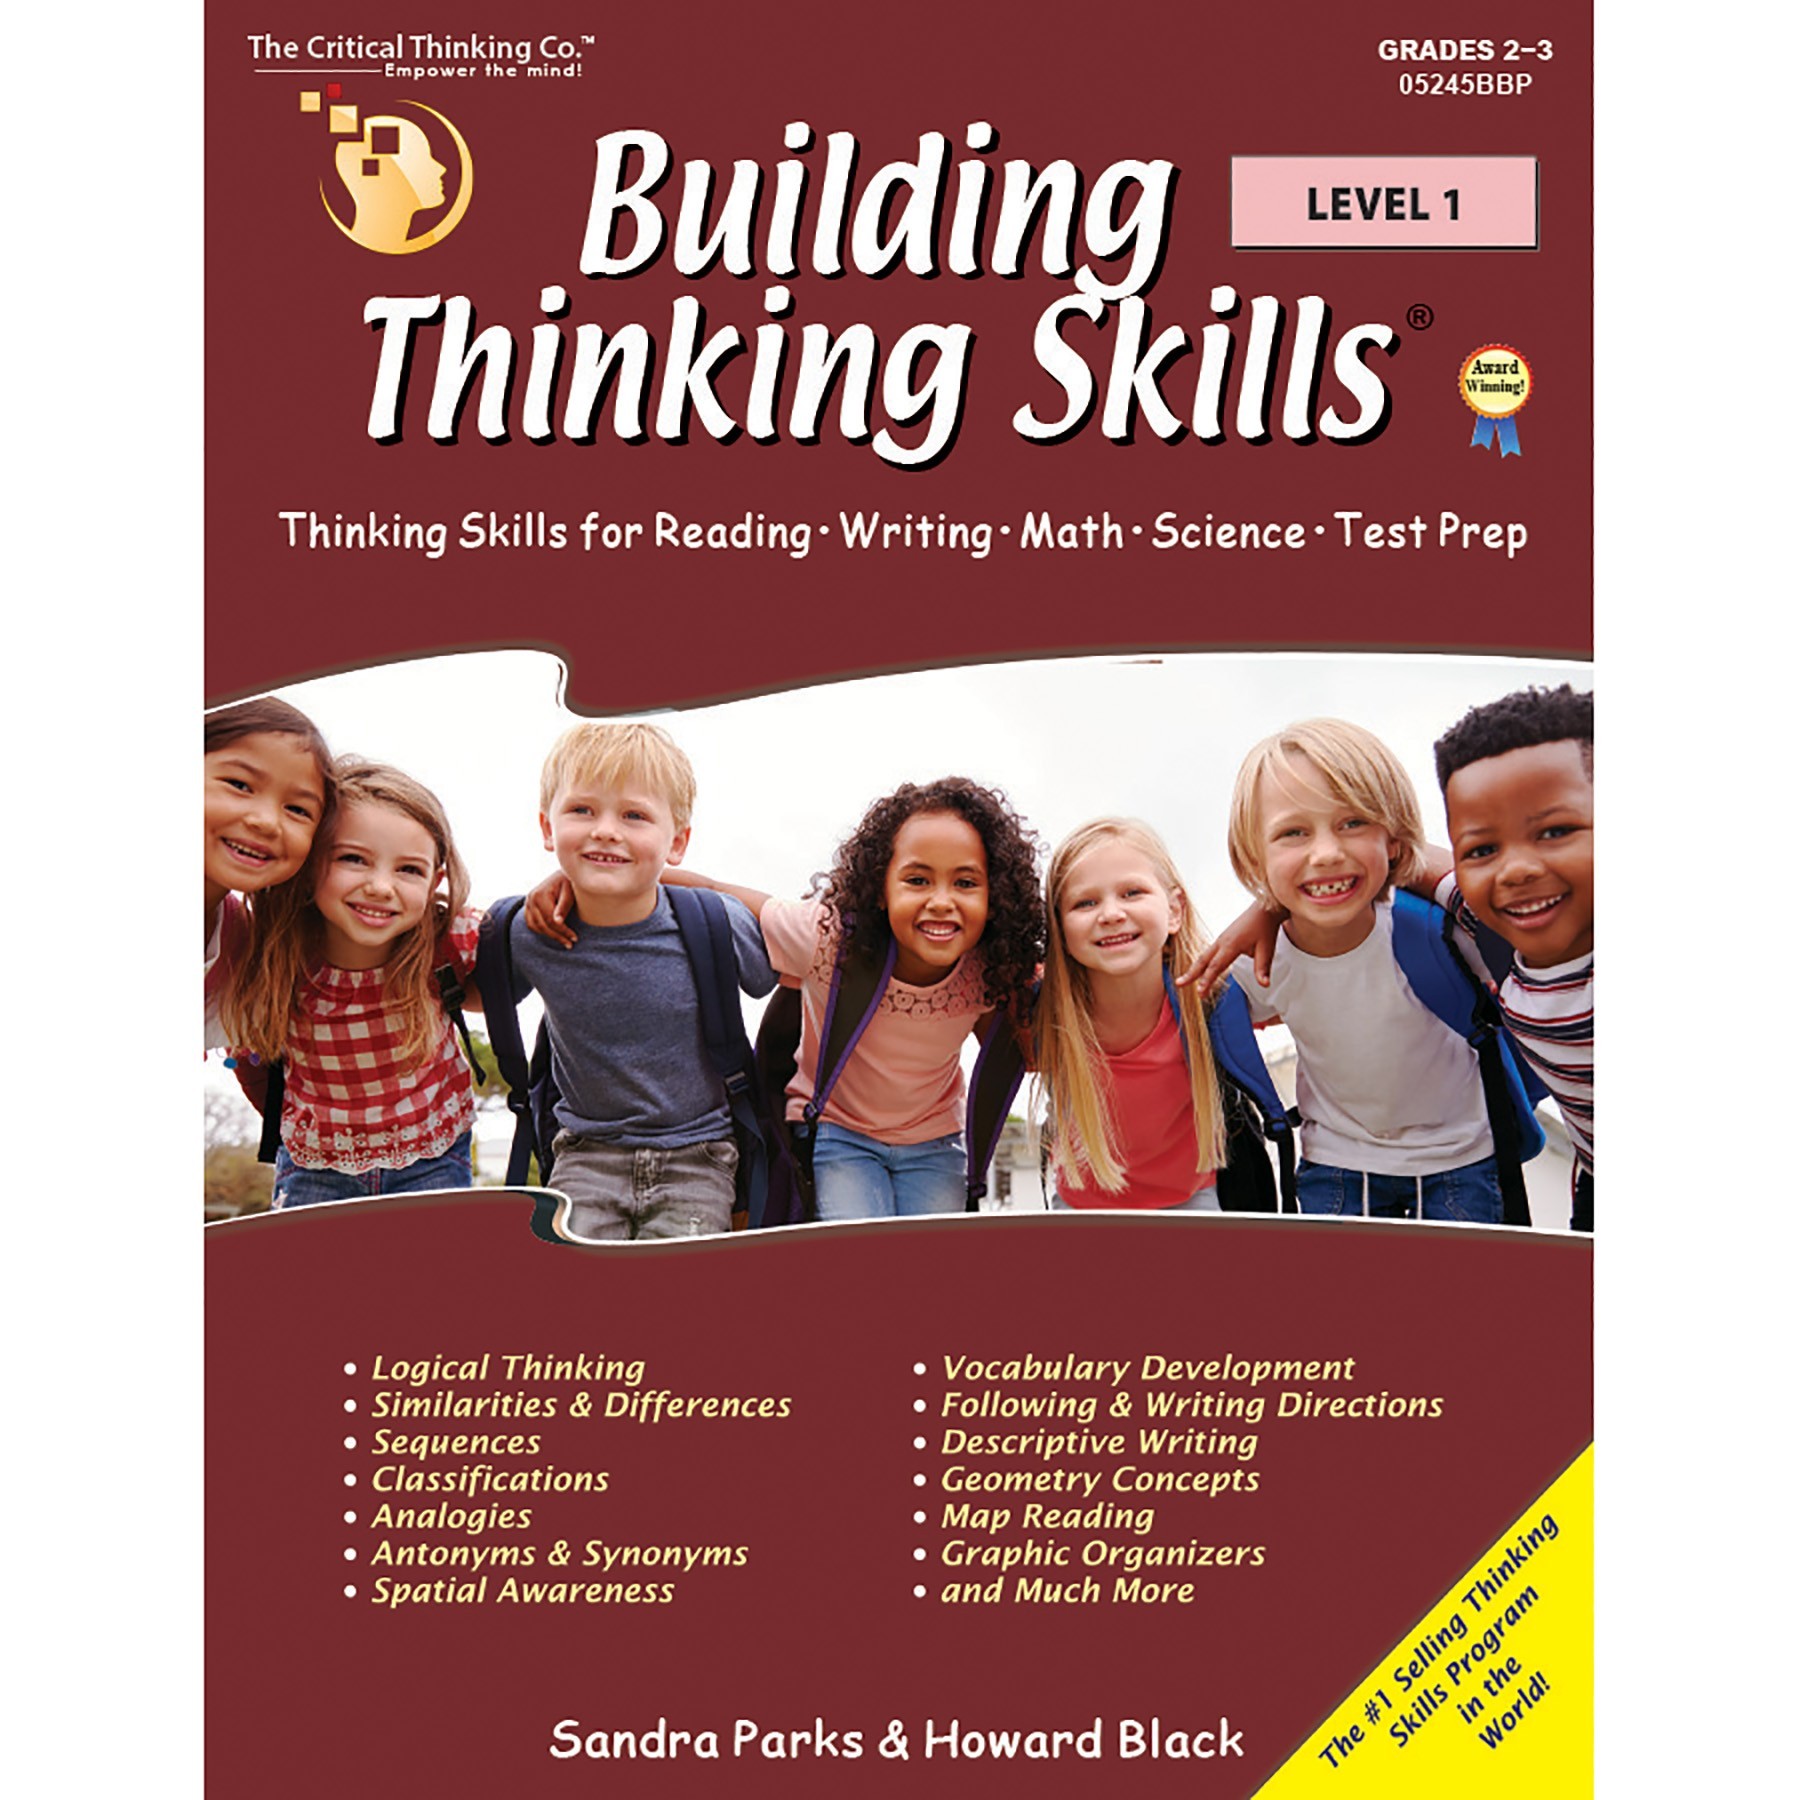 Building Thinking Skills, Level 1, Grades 2-3